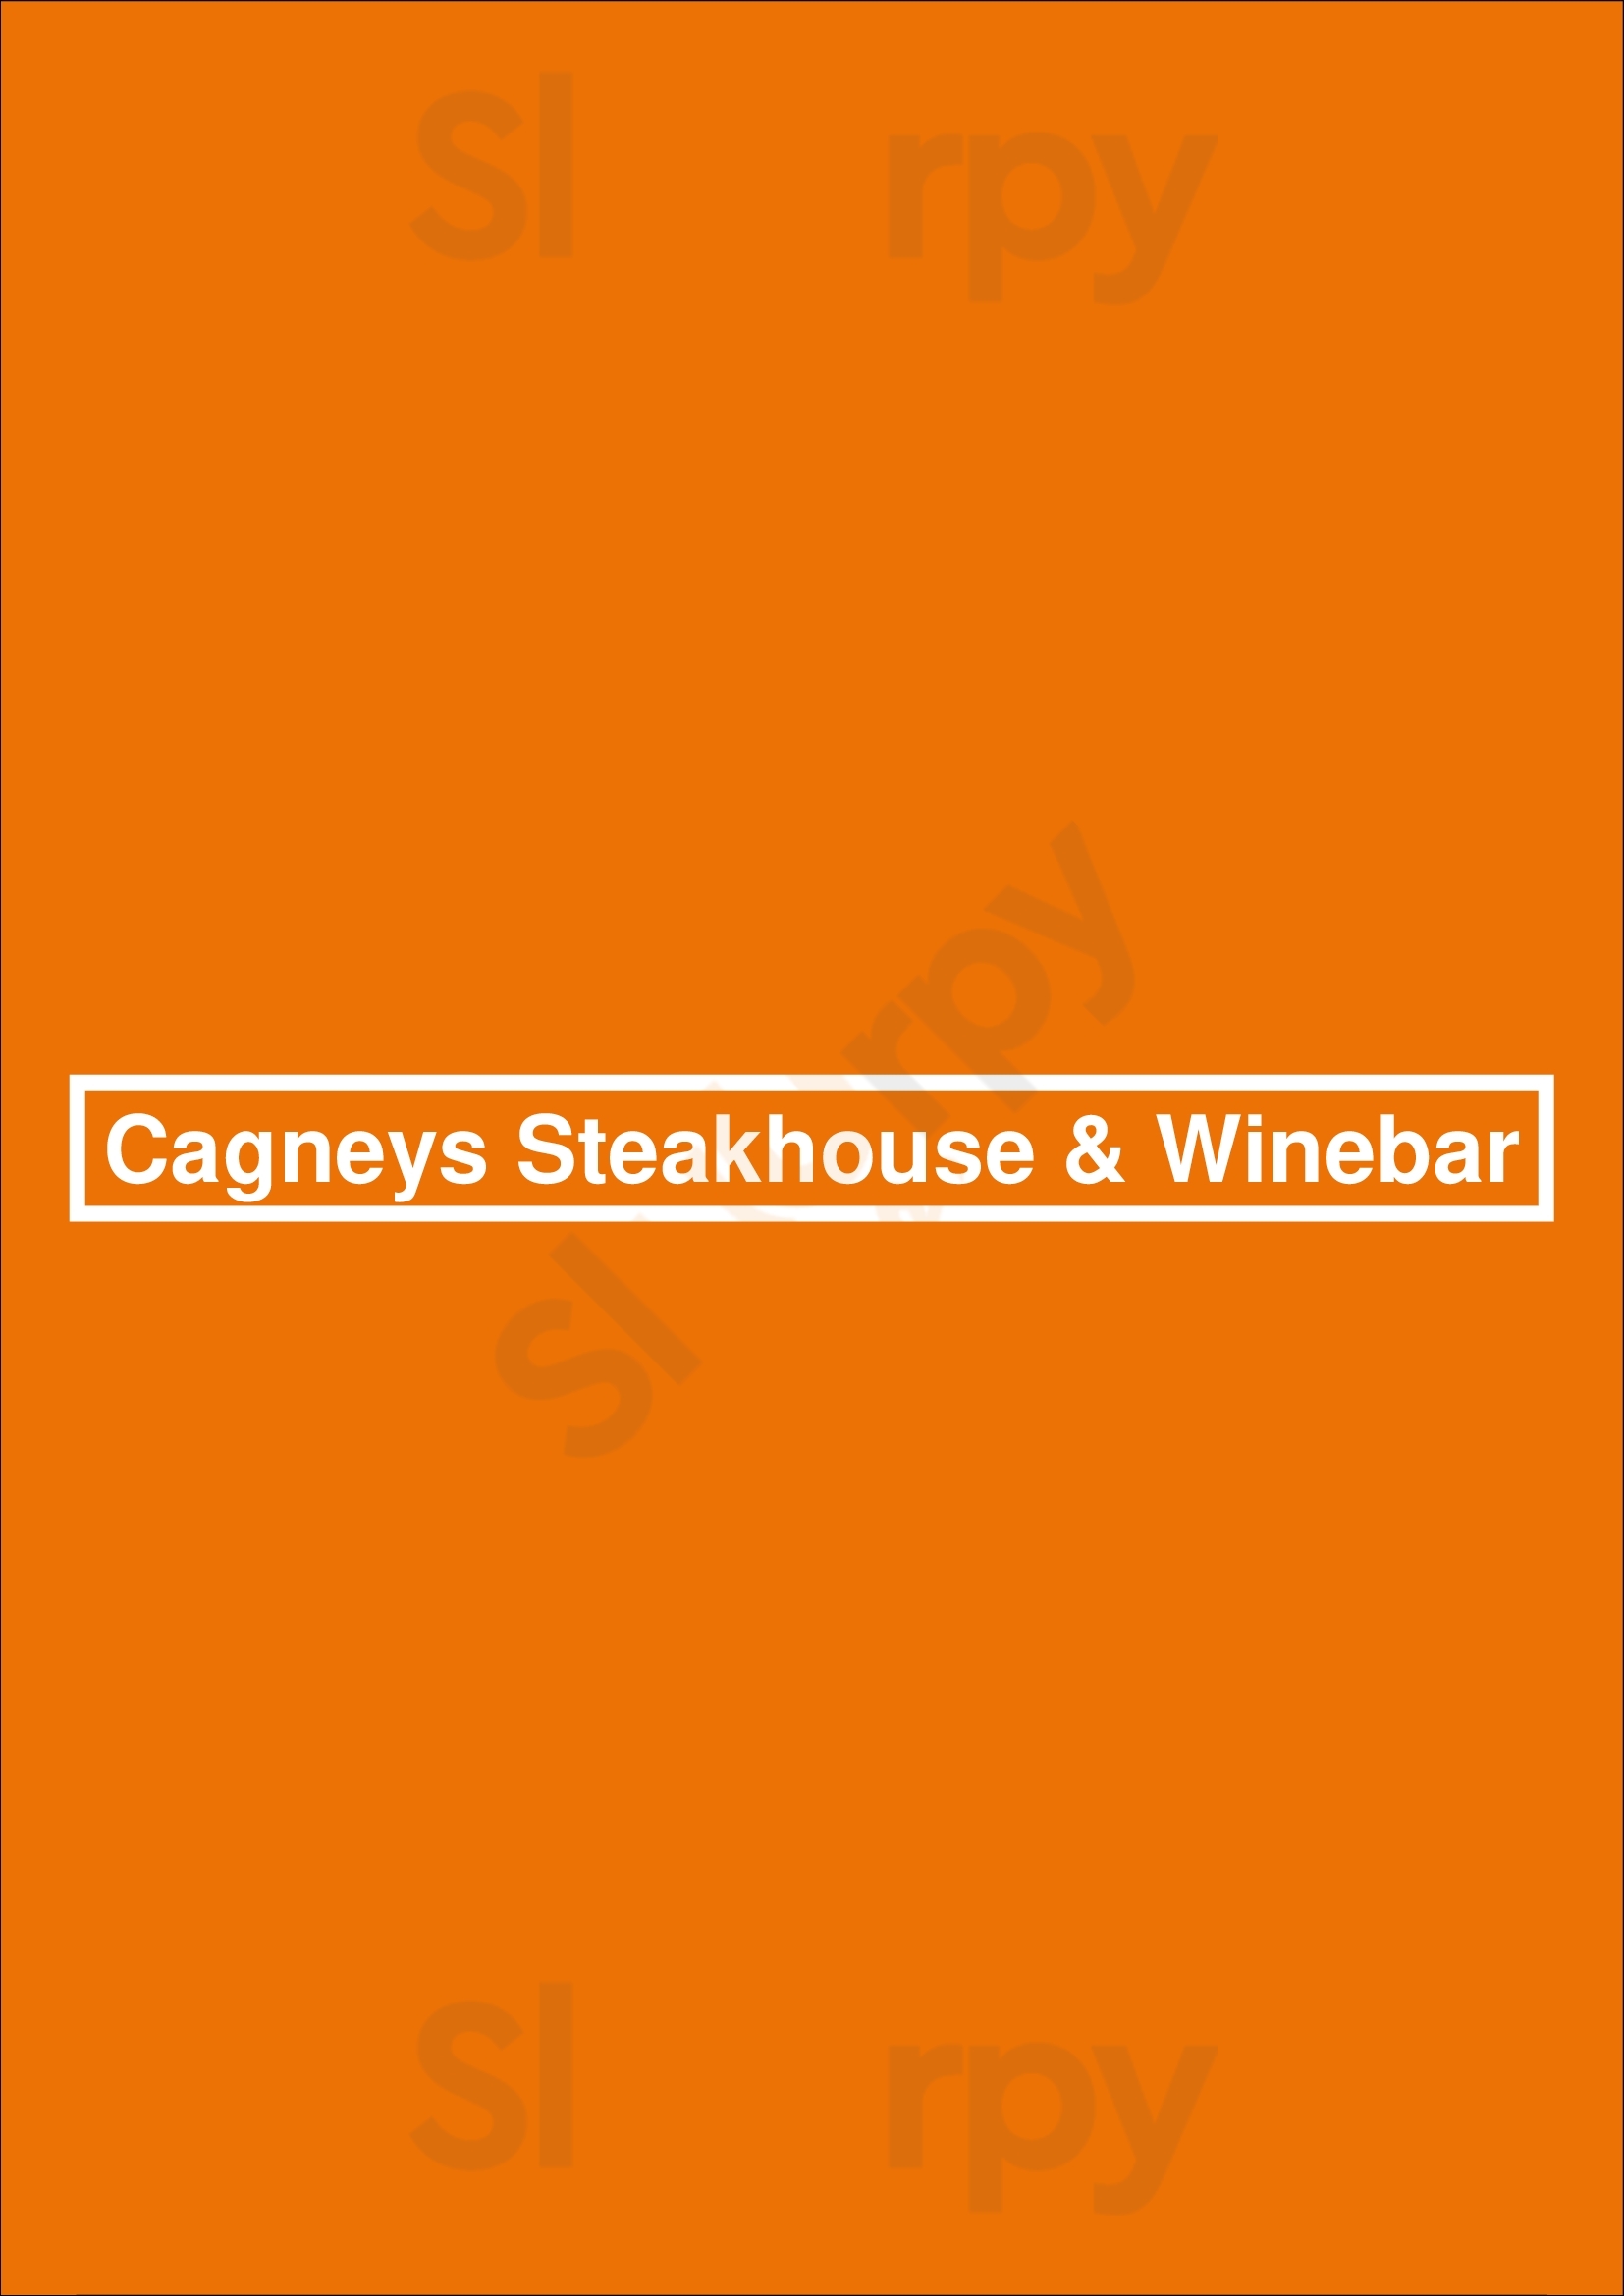 Cagneys Steakhouse & Winebar Mississauga Menu - 1